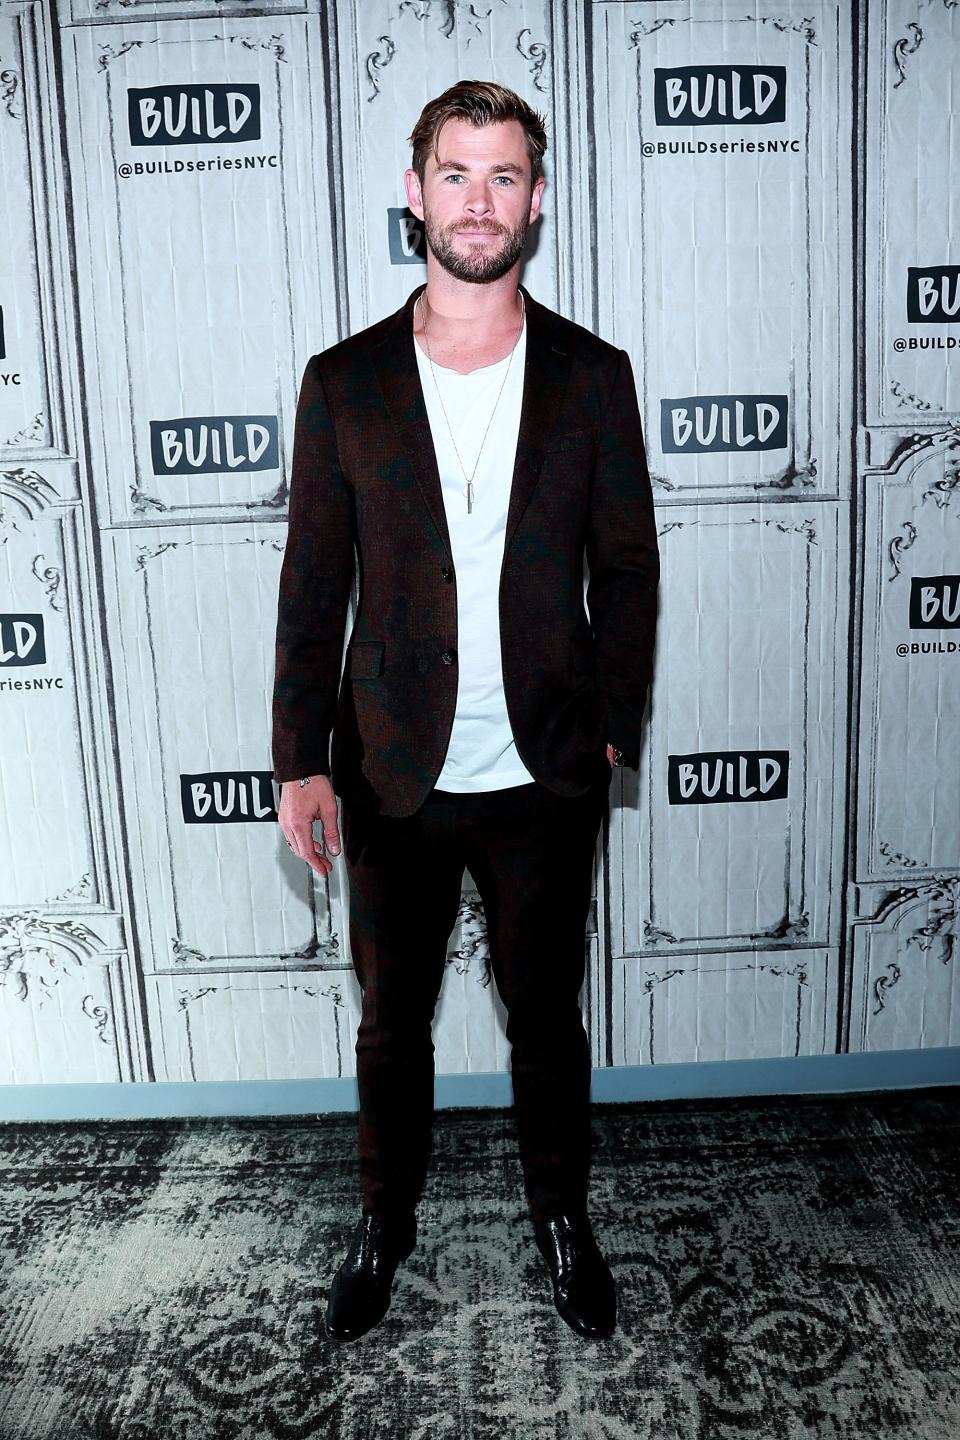 Chris Hemsworth on the Build red carpet